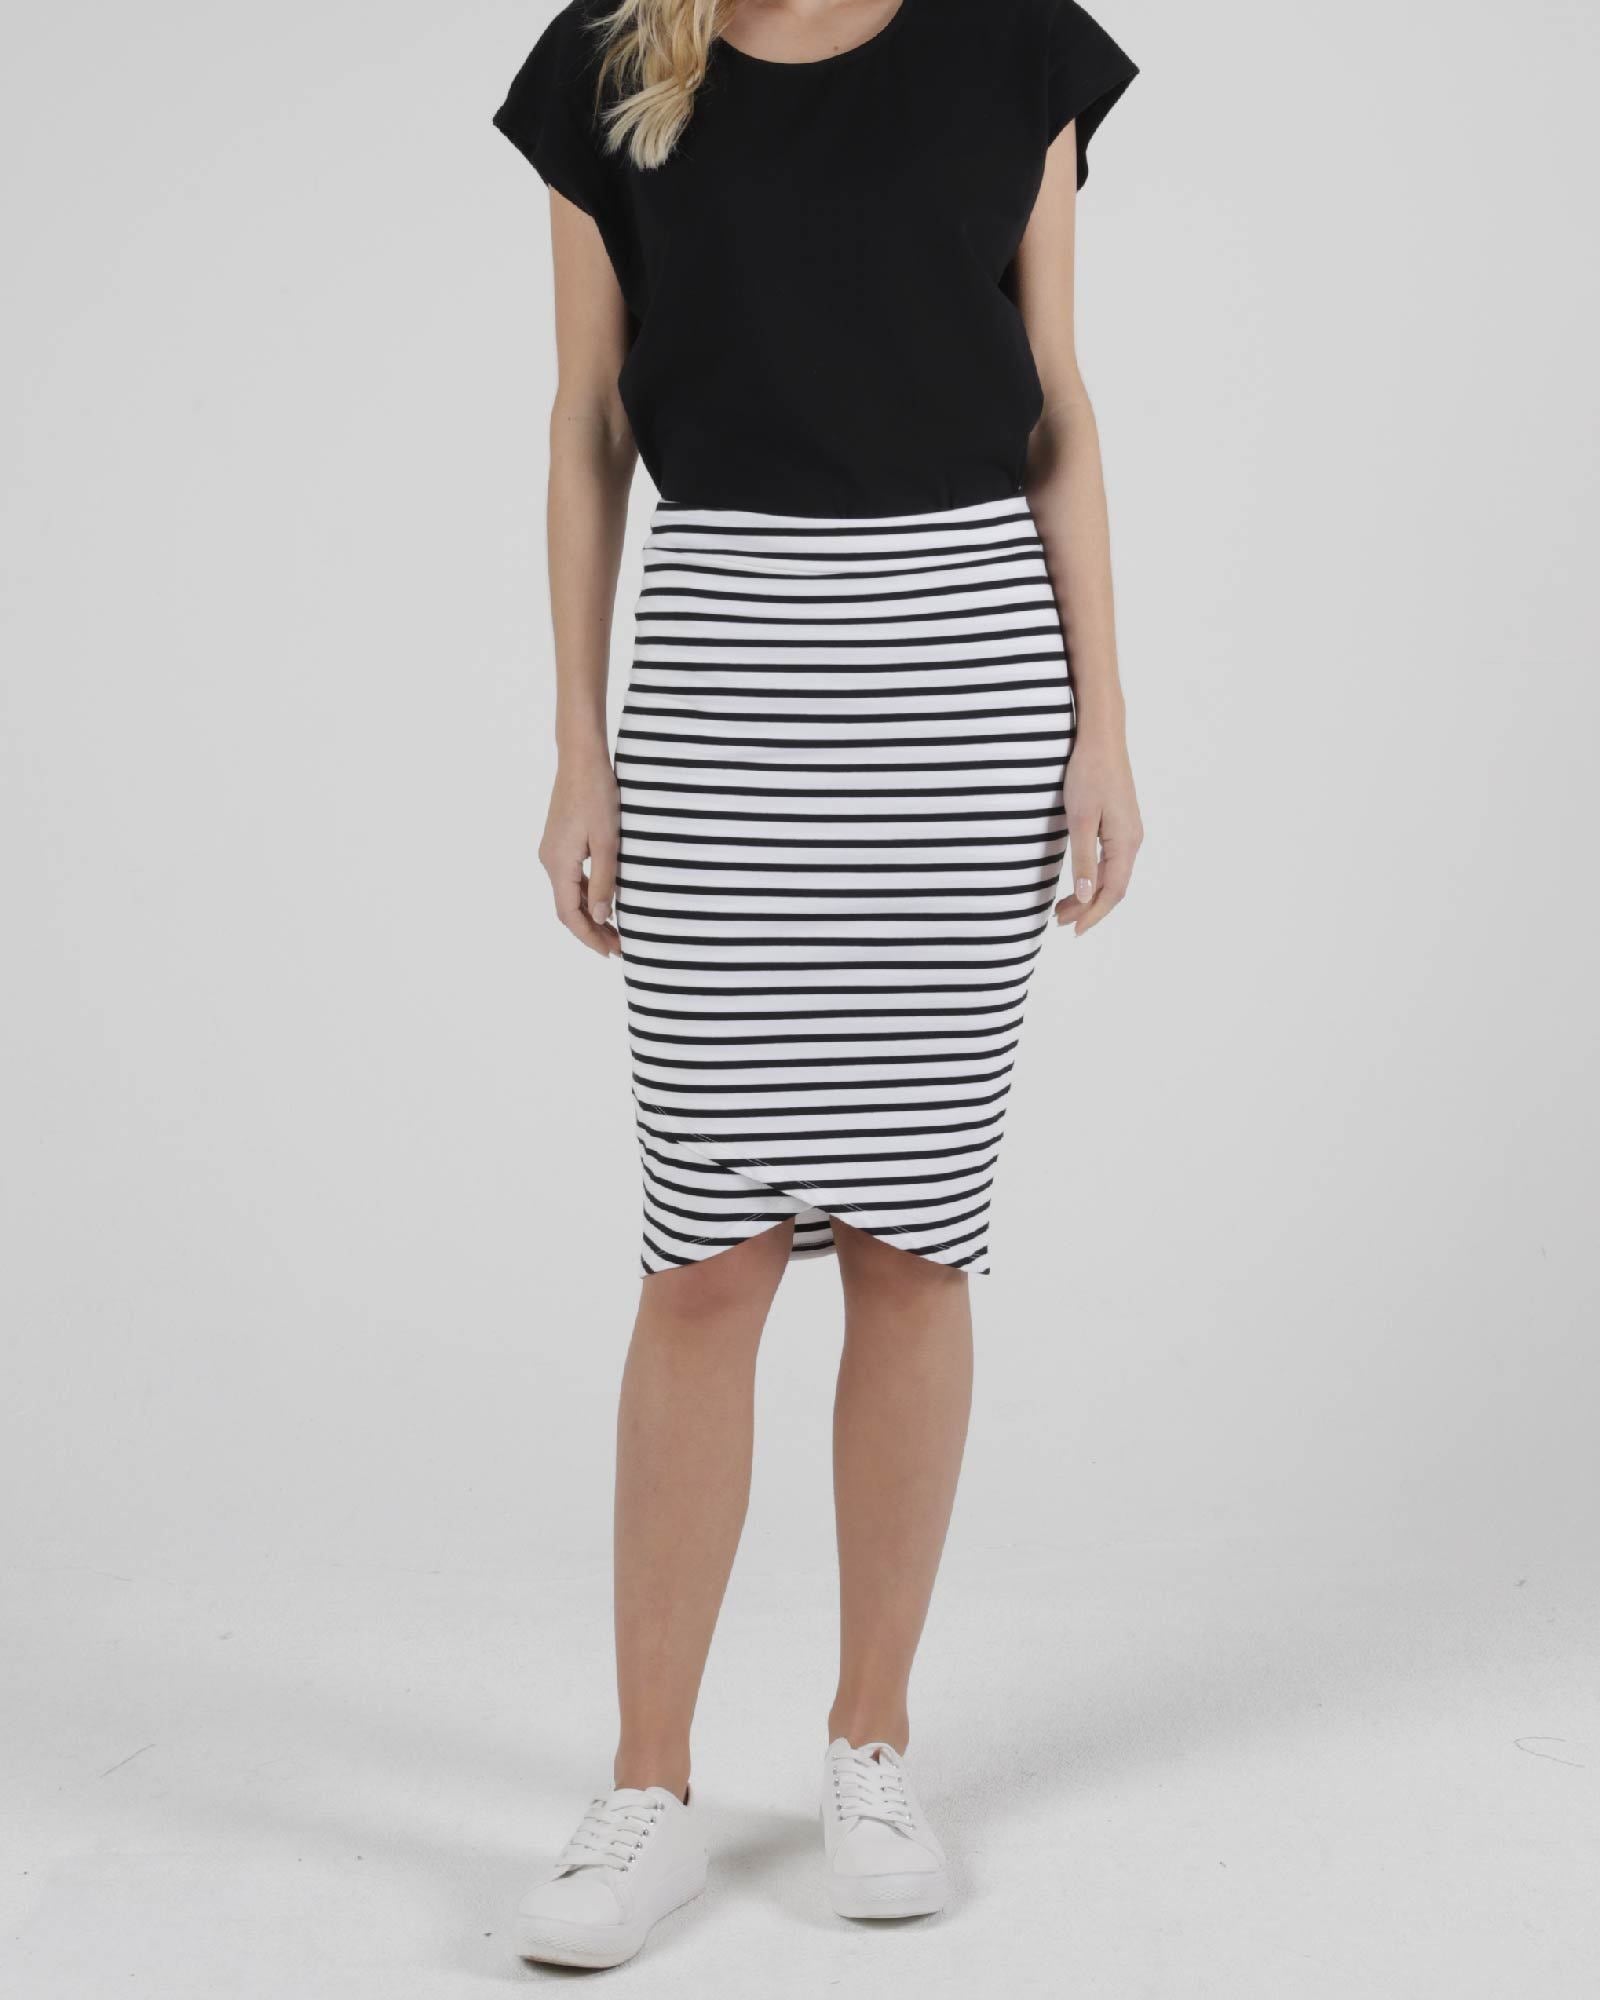 Siri Skirt - White/Black Stripe - Betty Basics - FUDGE Gifts Home Lifestyle